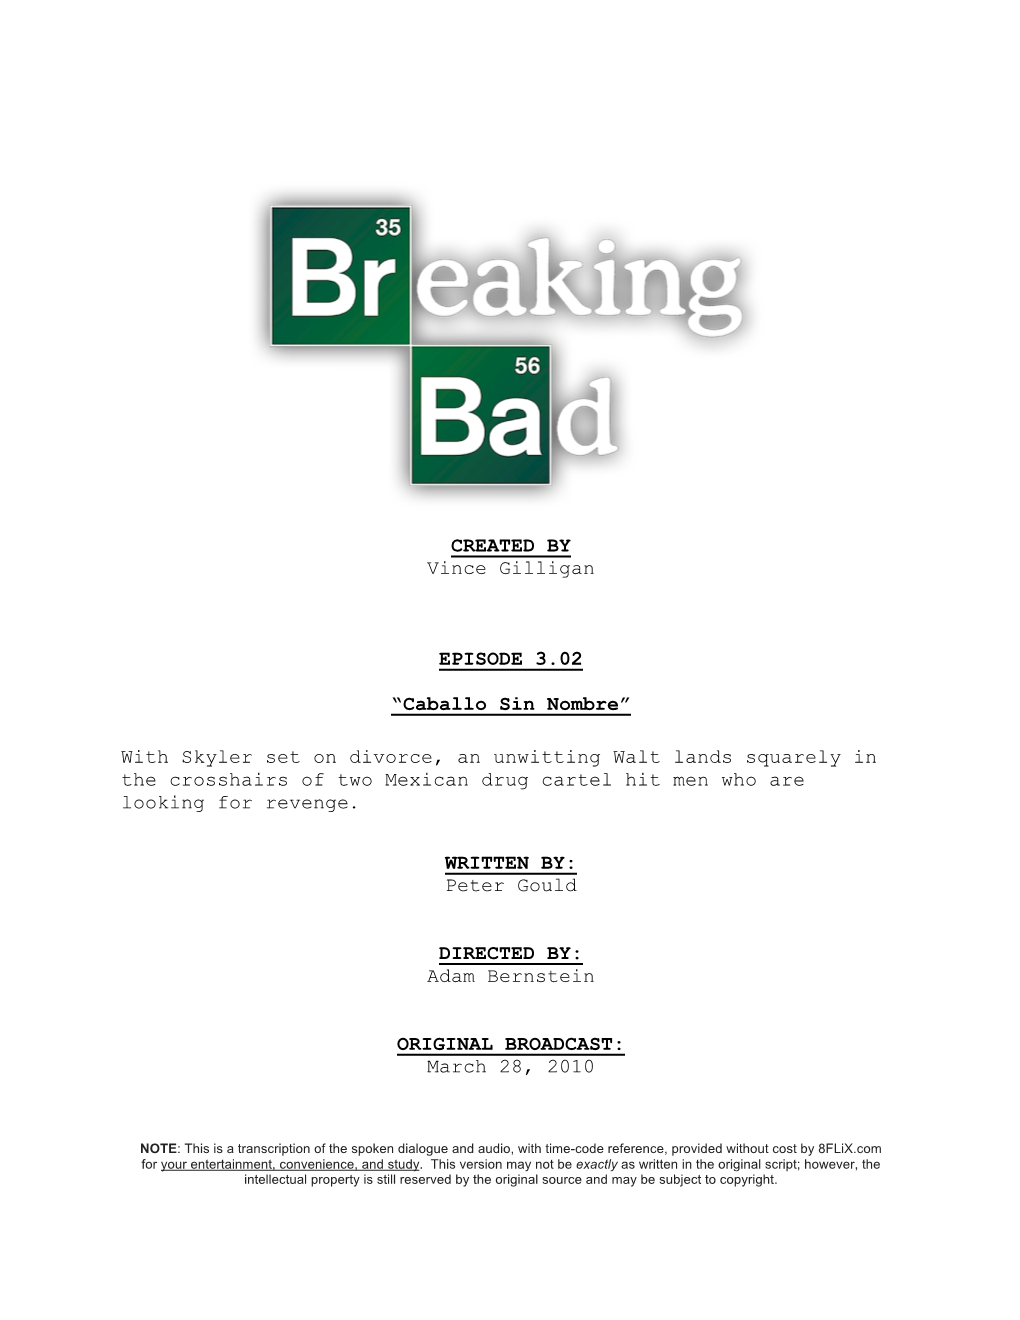 Breaking Bad | Dialogue Transcript | S3:E2